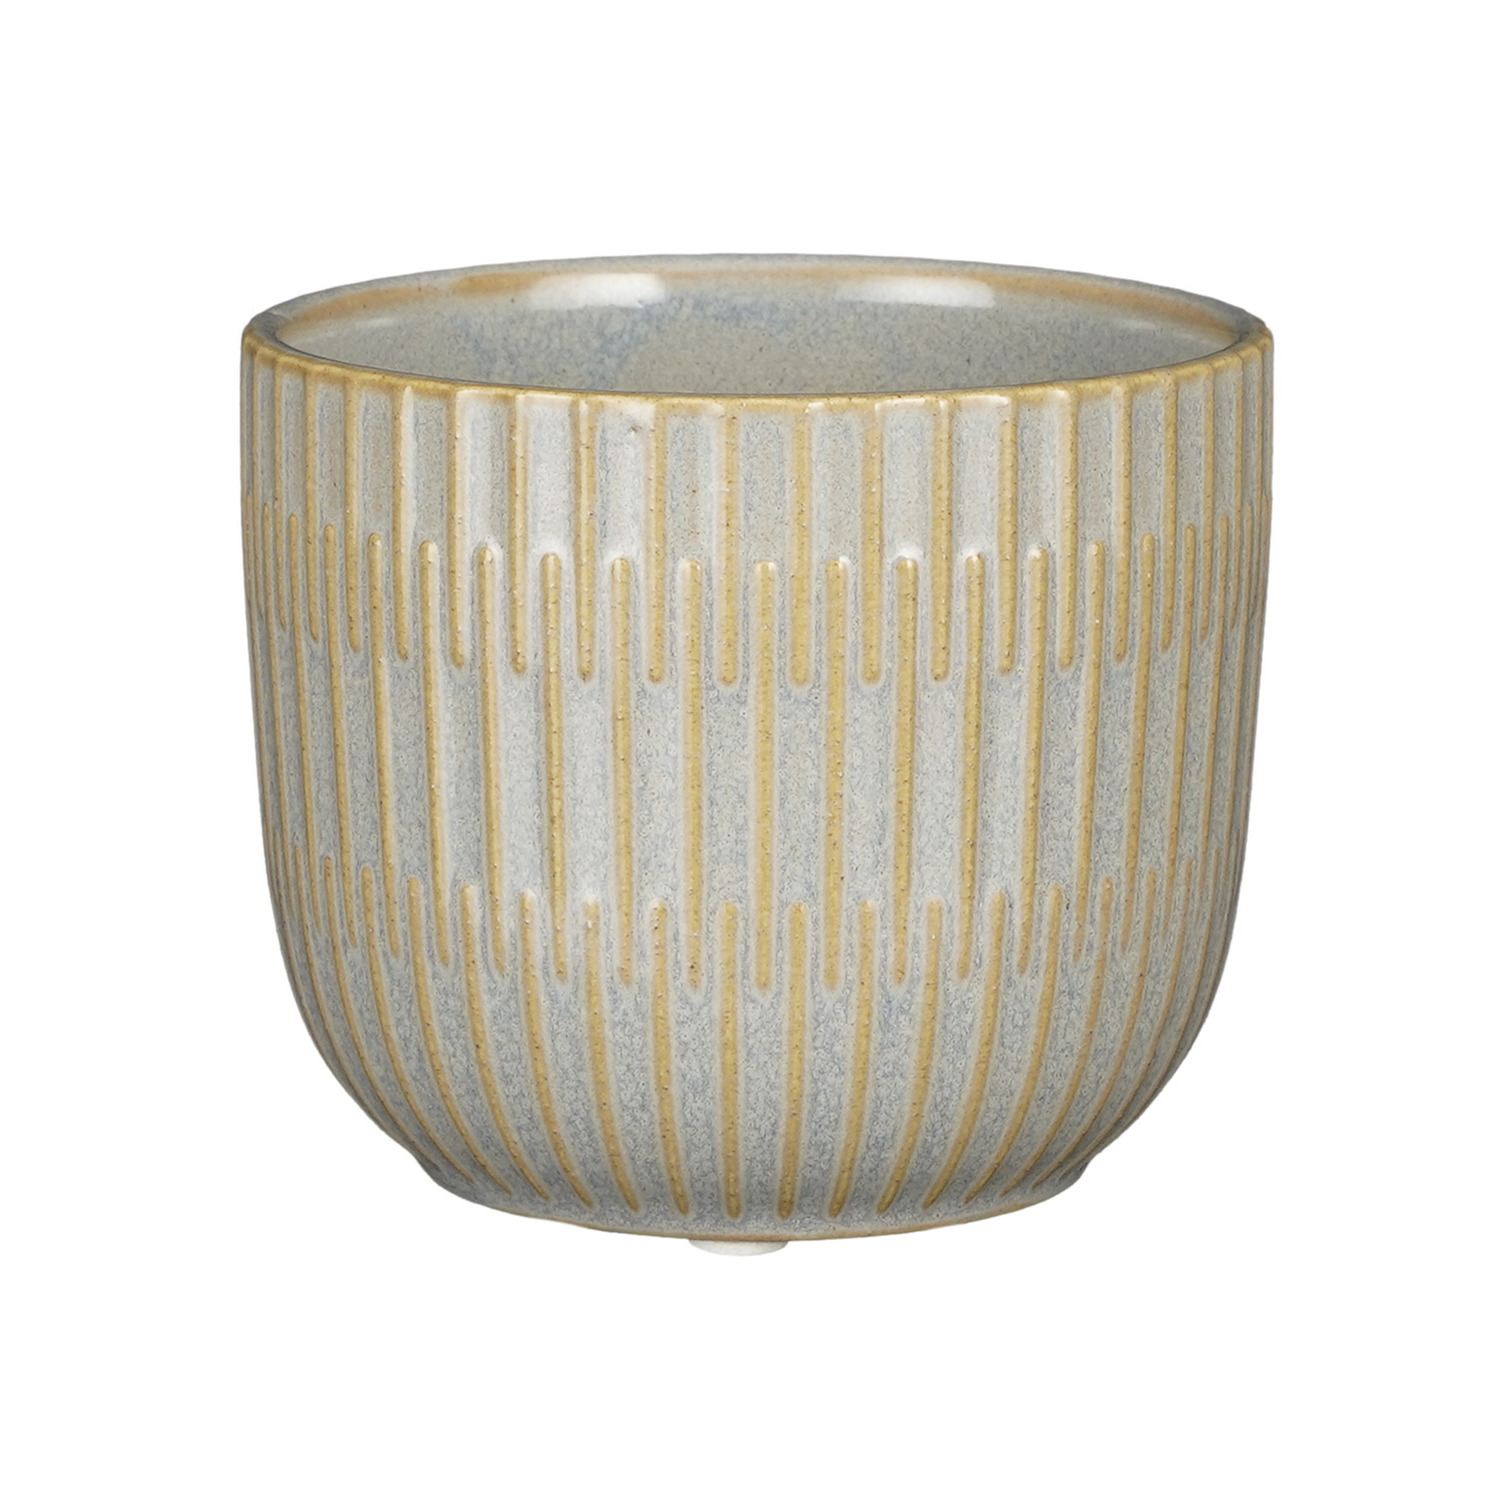 Mica Decorations Plantenpot/bloempot keramiek lichtgrijs stripes patroon - D11/H9 cm -